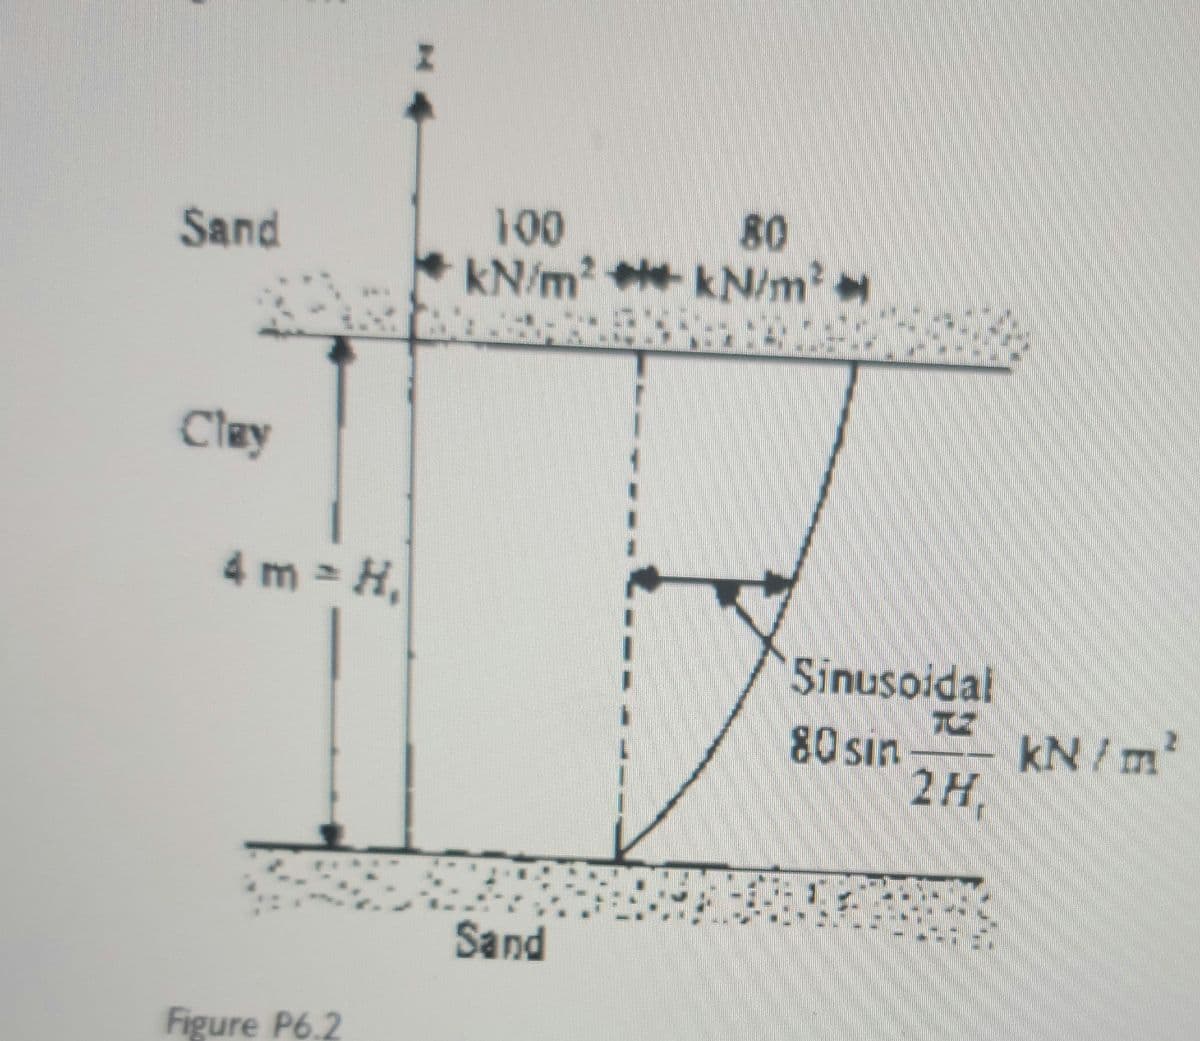 Sand
Clay
4 m = H,
Figure P6.2
100
80
kN/m²kN/m²
CASAMENTO
:
3
Sand
Sinusoidal
80 sin
A
TC
2H
kN/m²